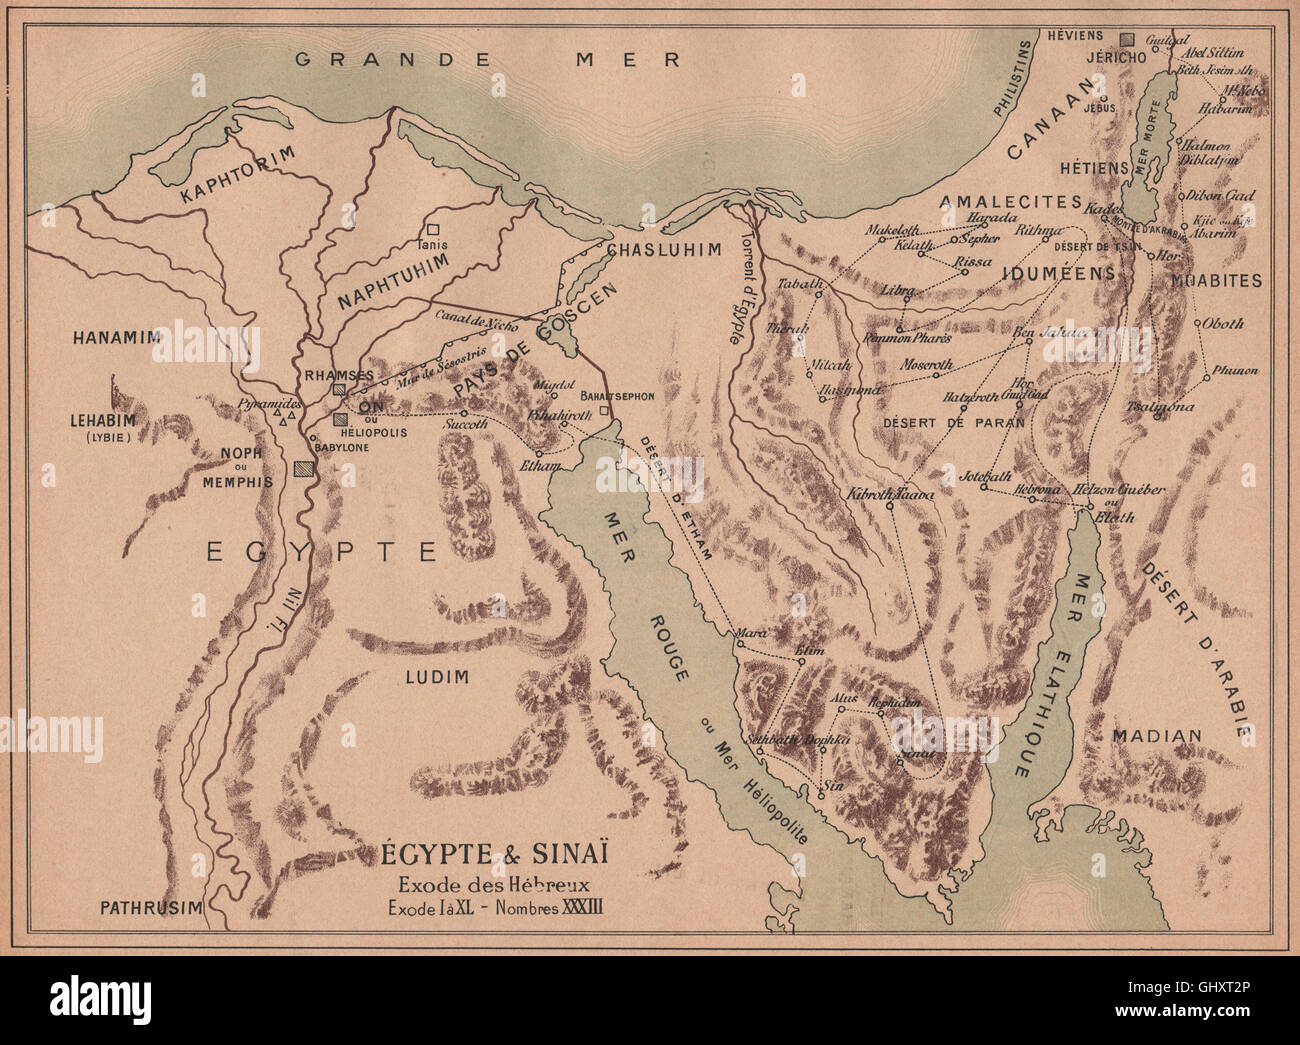 Historic Map - Carte du Voyage et Route Des Israelites dans le Desert  Depuis :: Holy Land, the Arabian Peninsula, Jordan, Syria and eastern  Egypt